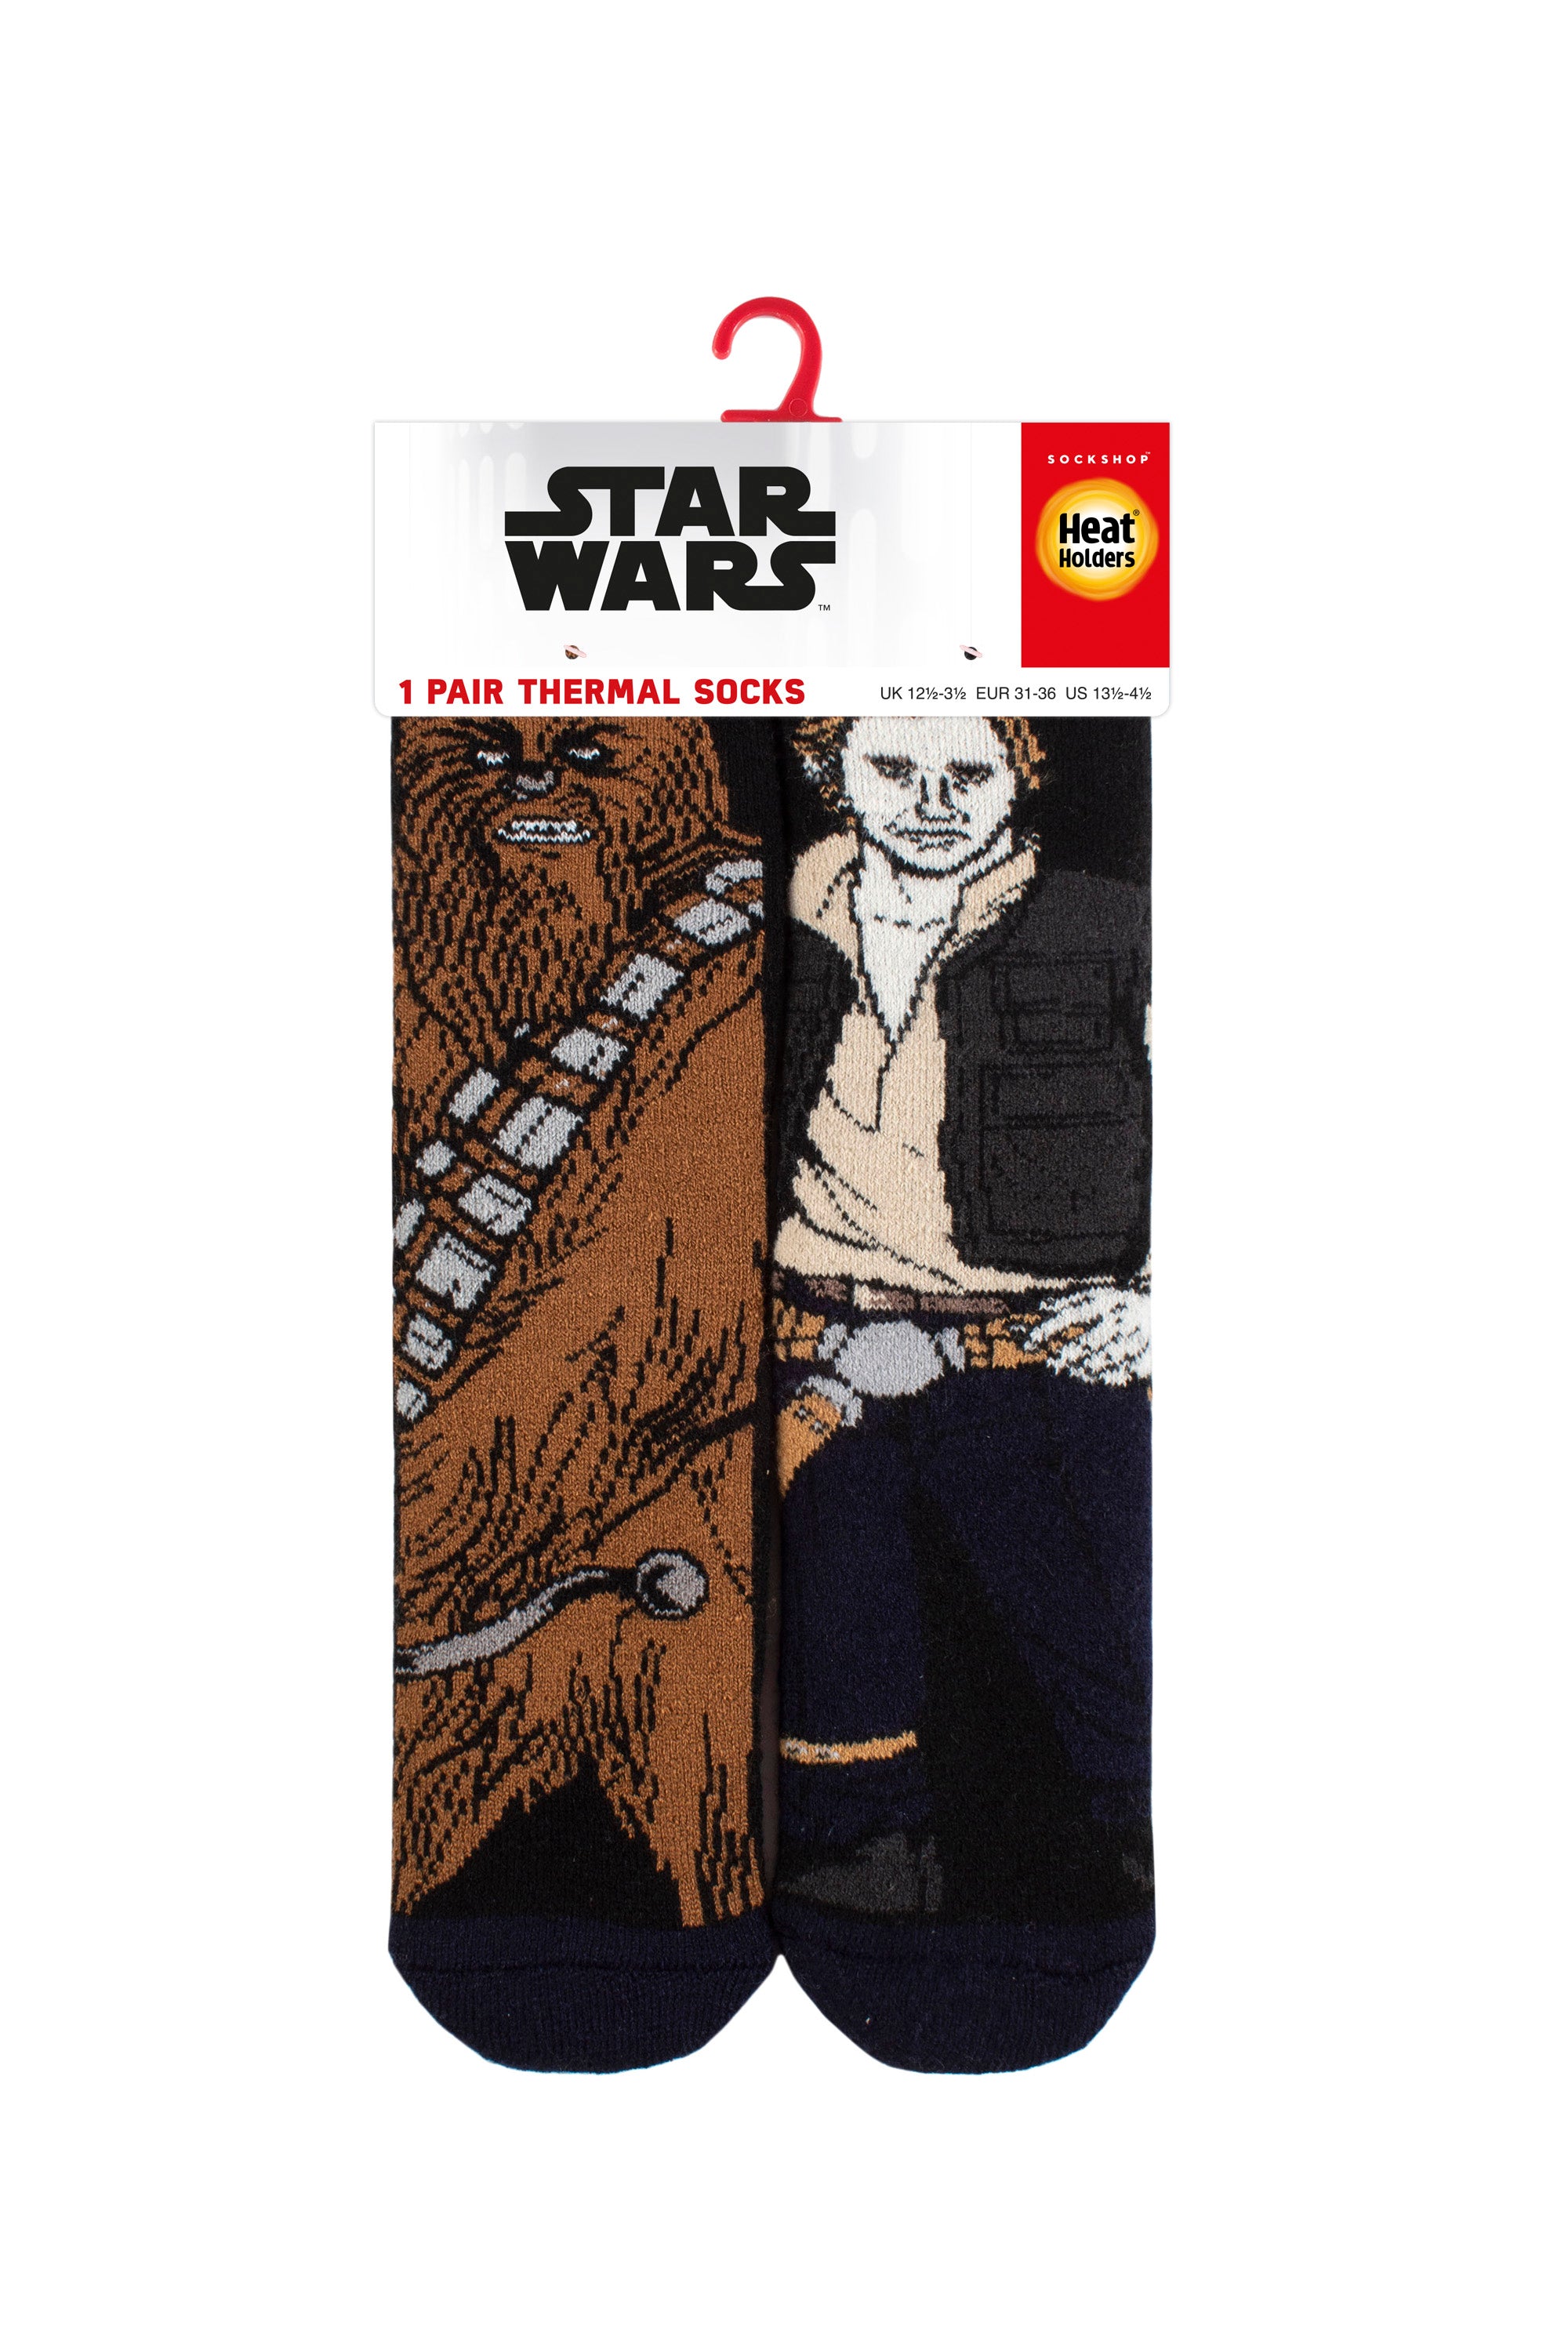 HEAT HOLDERS Lite Licensed Star Wars Character Socks-Chewie and Hans Solo Kids